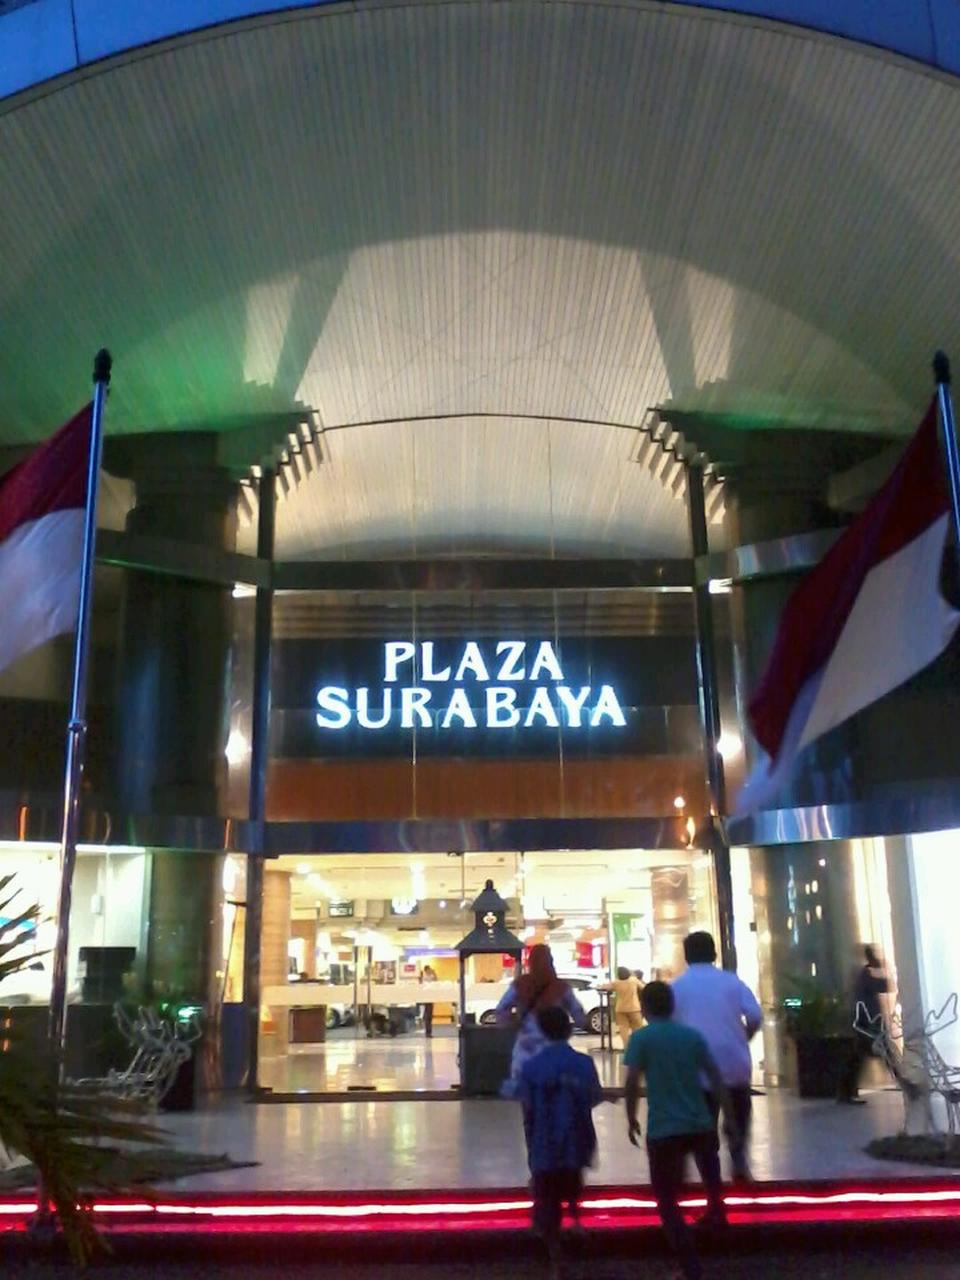 Alamat Delta Plaza Surabaya, Sejarah Angker Asal Usul 